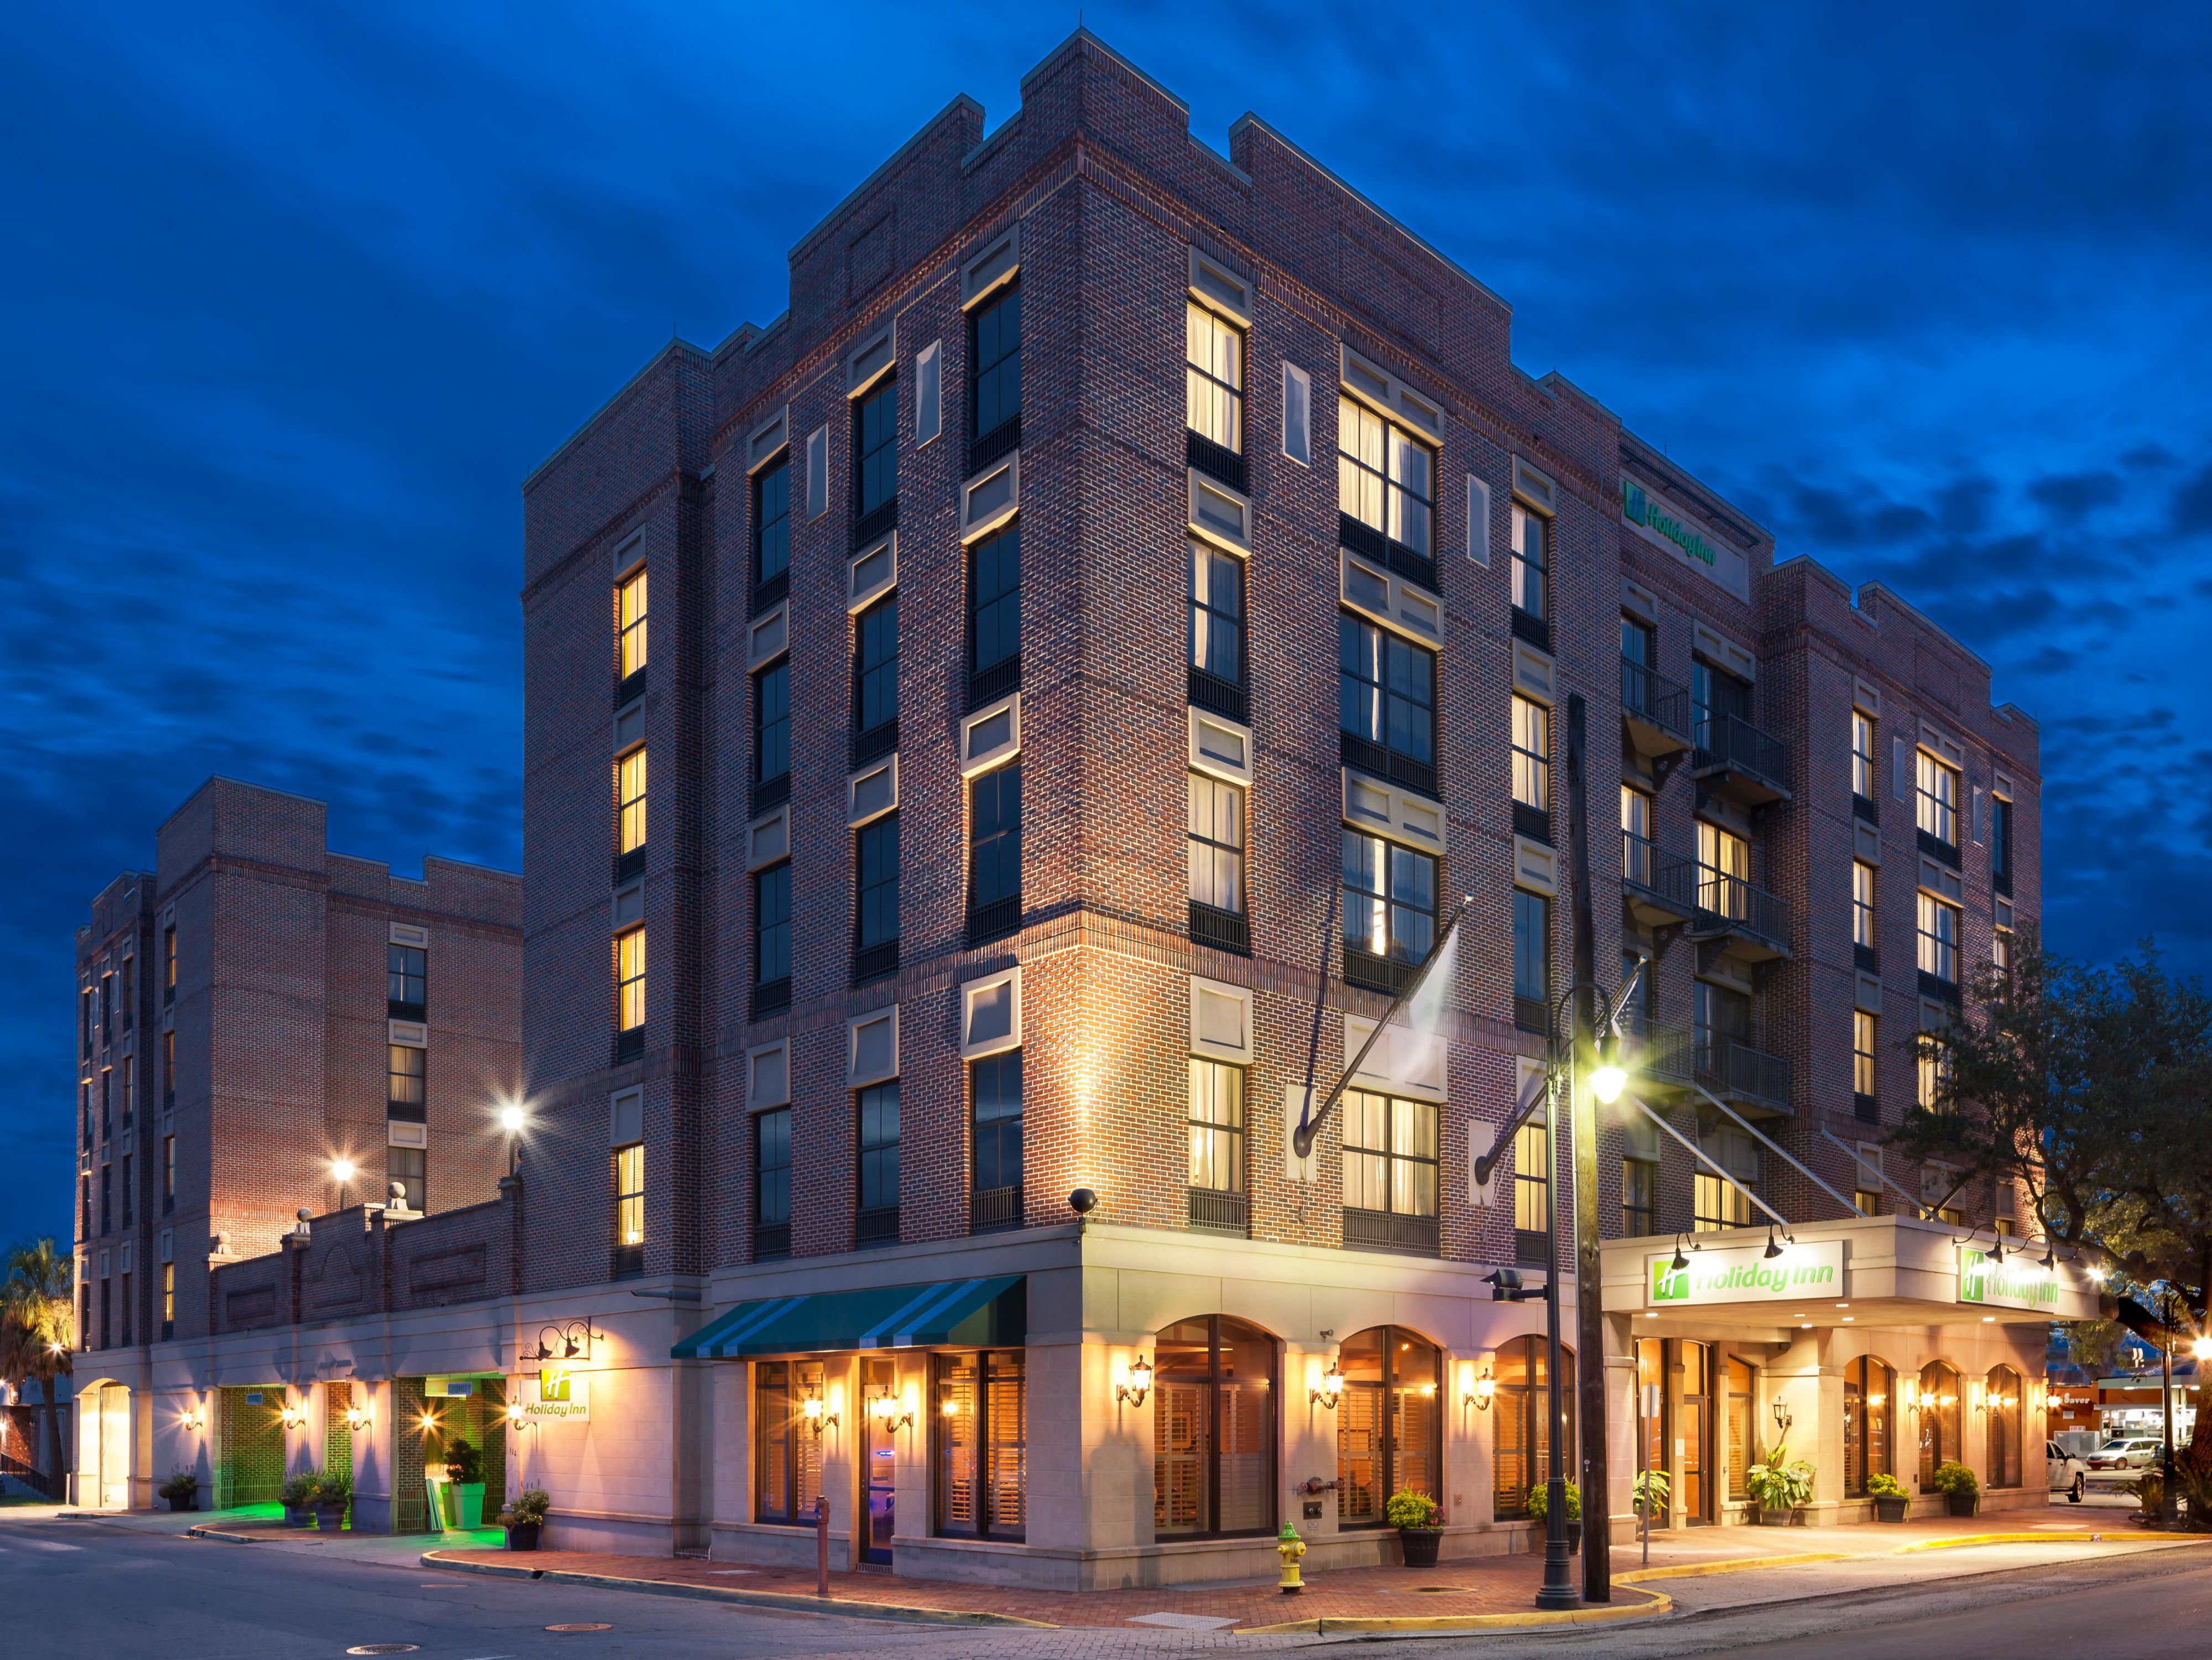 Hotels Downtown Savannah Ga Holiday Inn Savannah Historic District